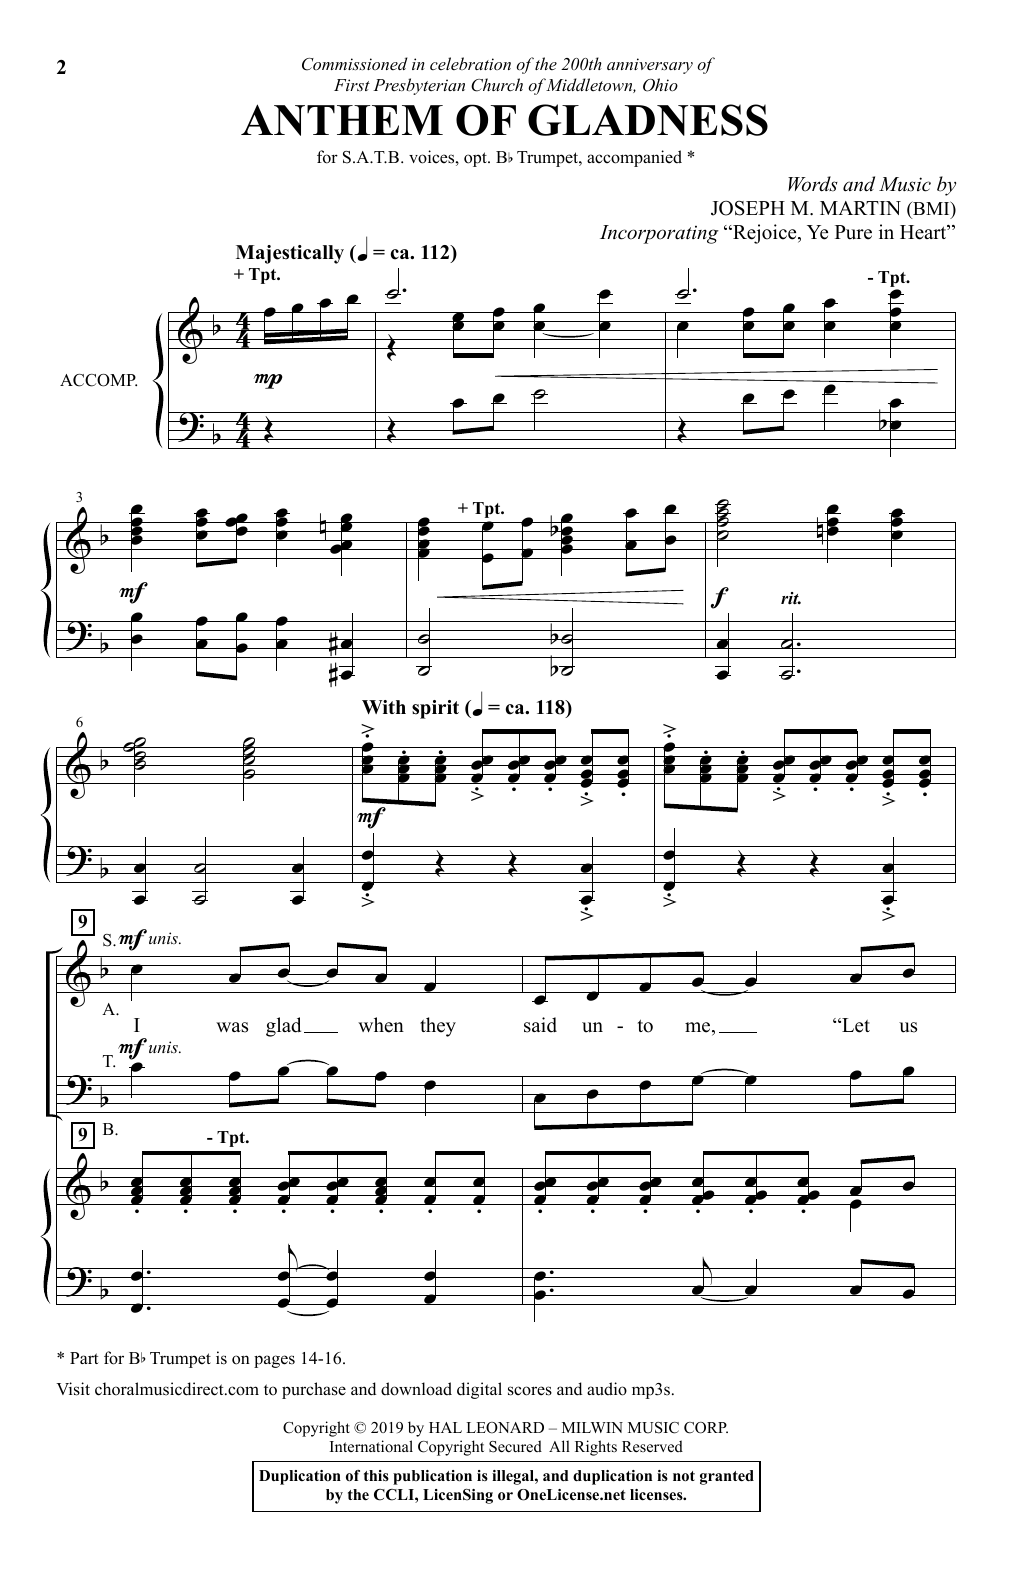 Download Joseph M. Martin Anthem Of Gladness Sheet Music